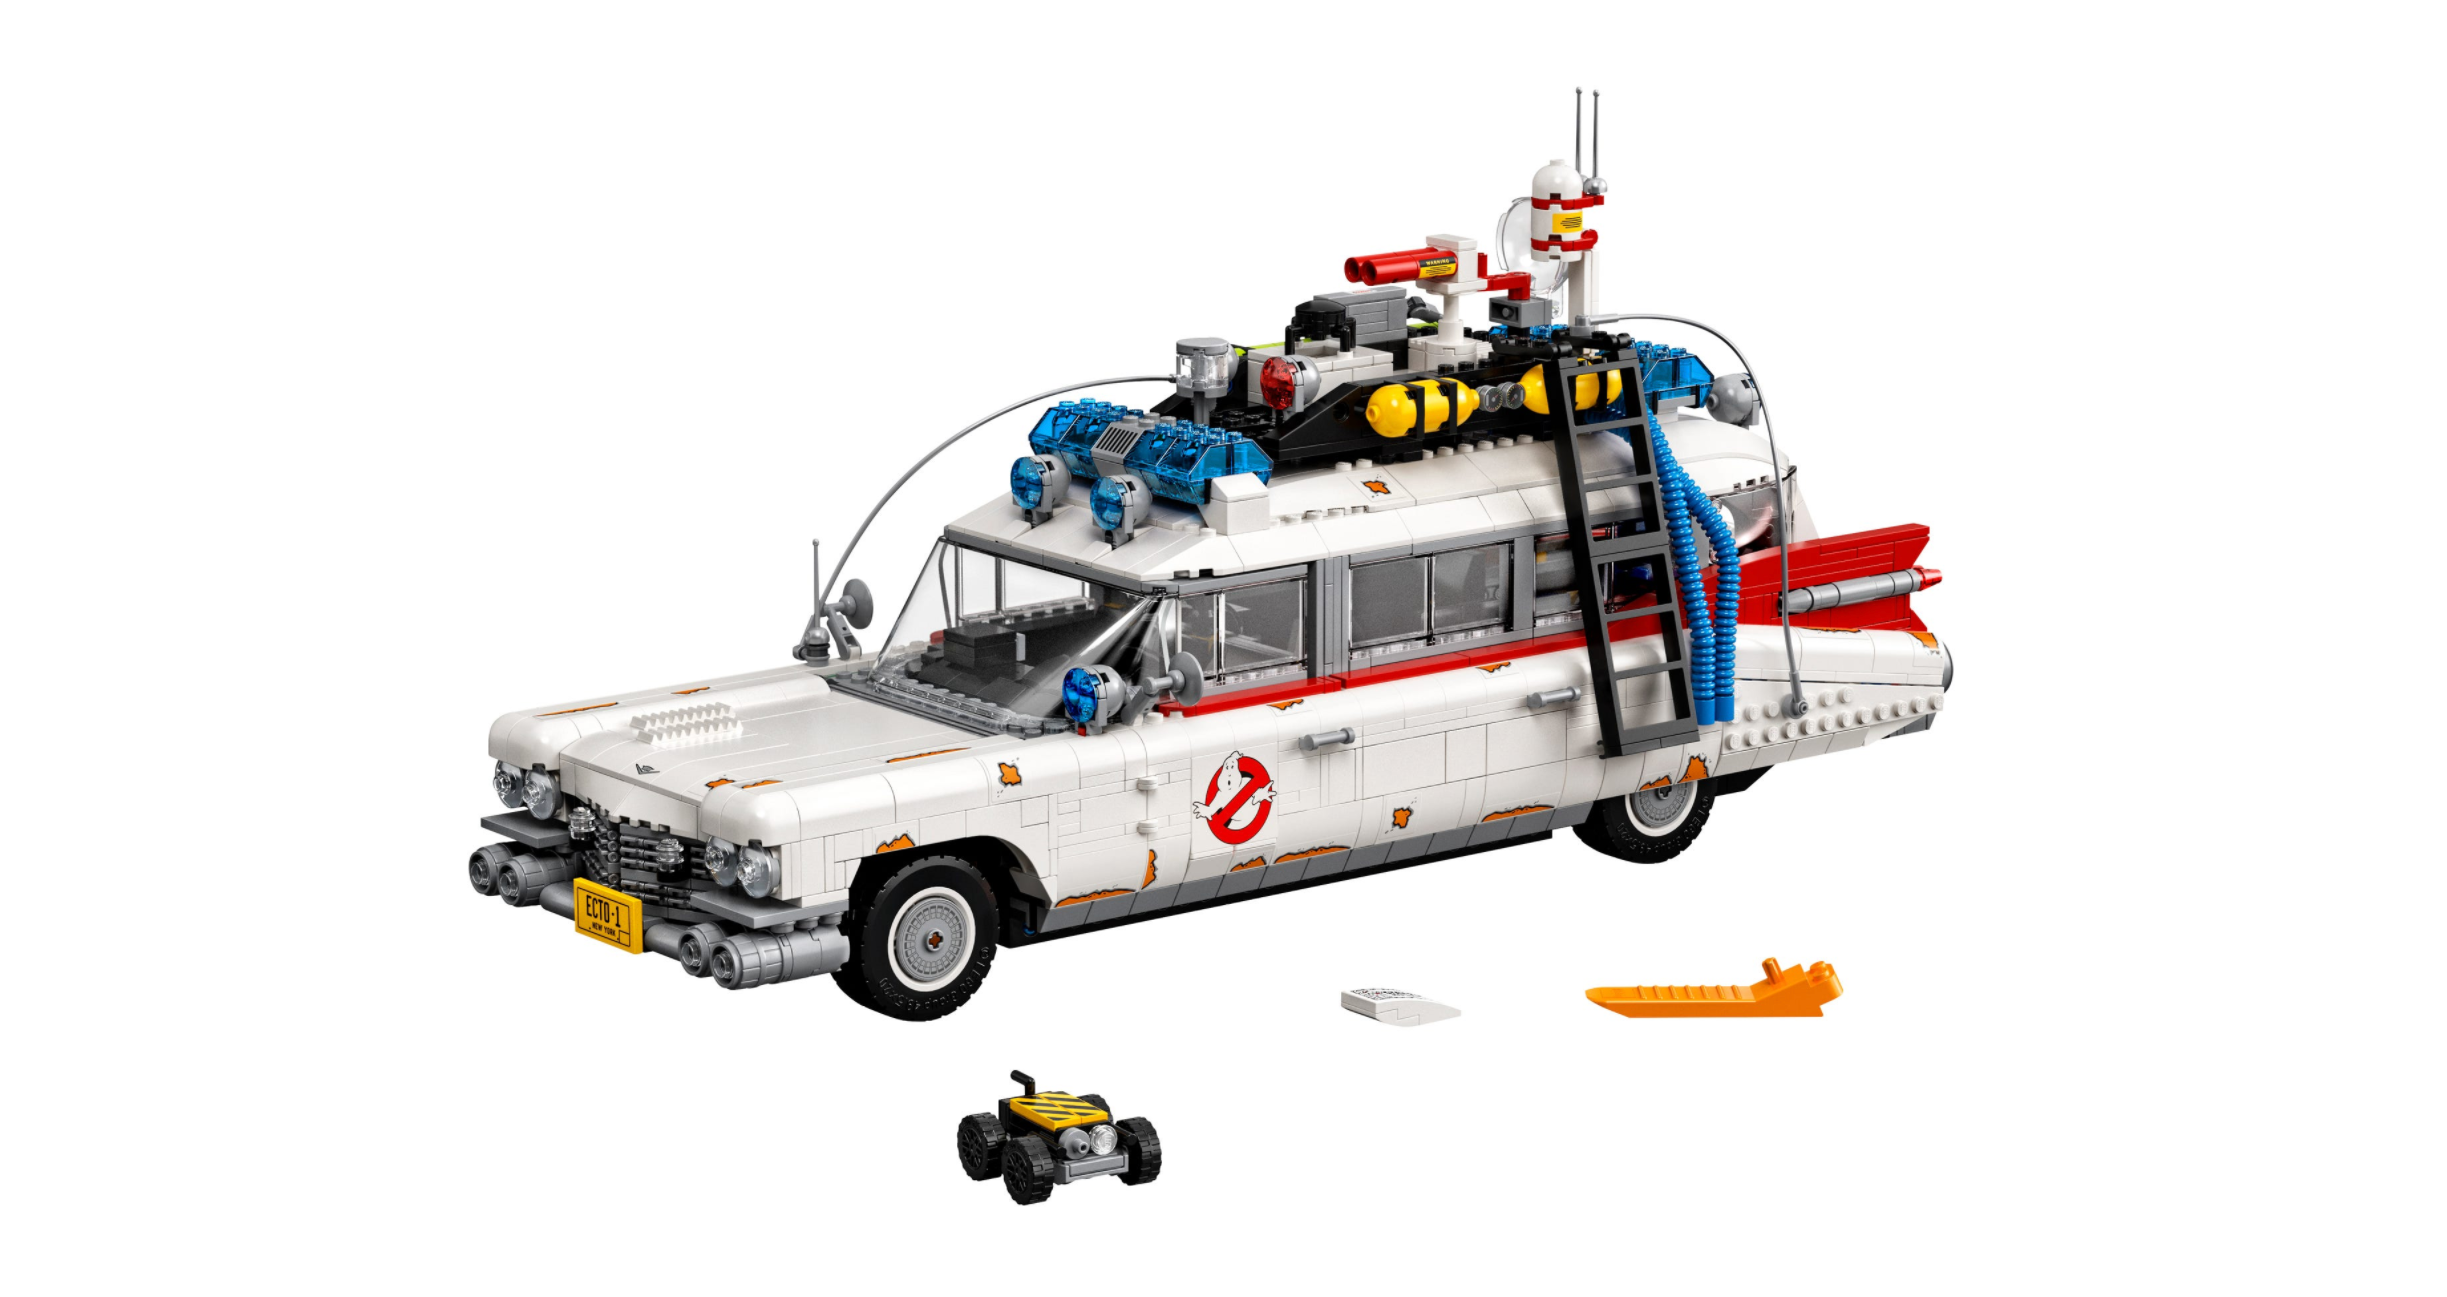 Ghostbusters ECTO-1 LEGO set